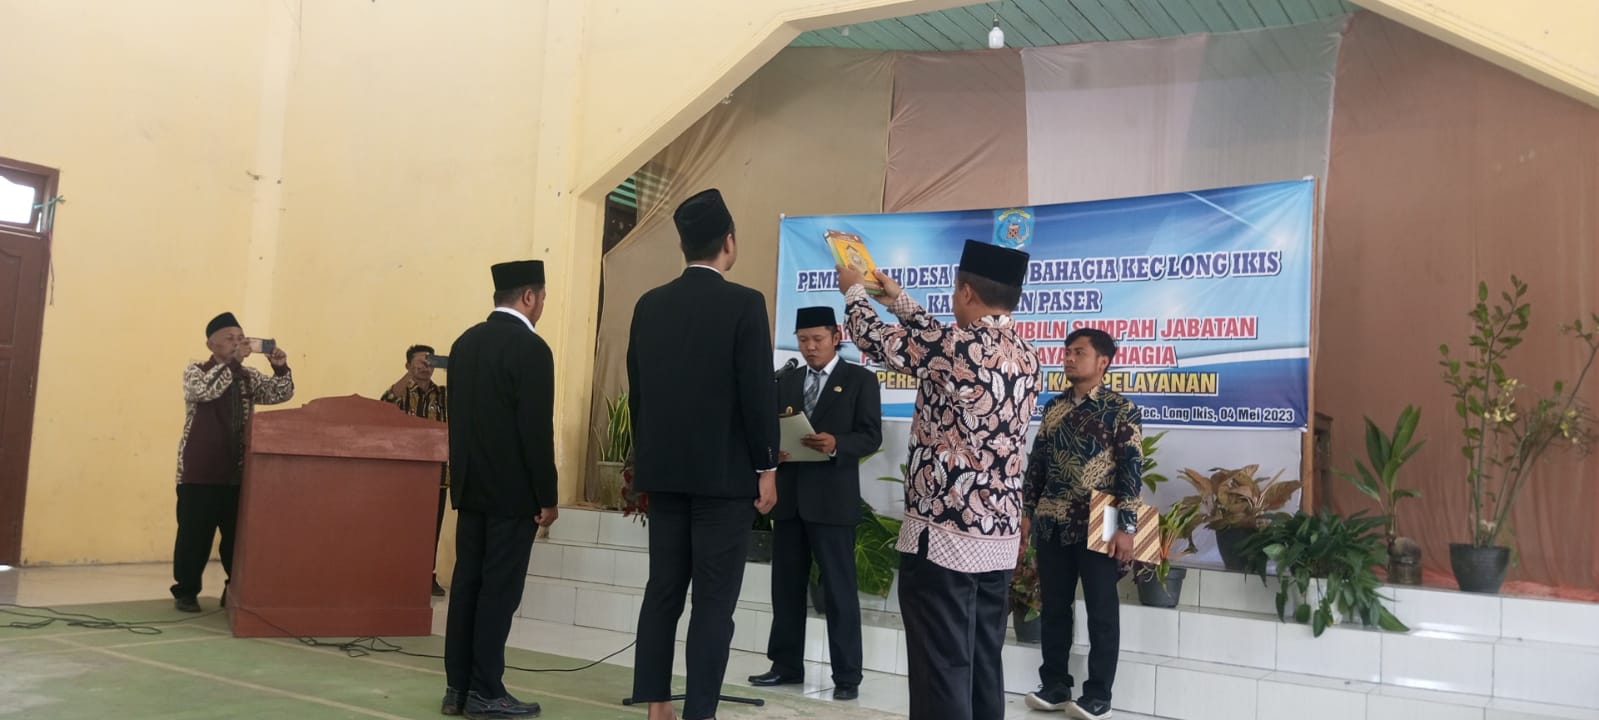 PMD Long Ikis Hadiri Pelantikan Perangkat Desa Krayan Bahagia, Drs. Mika Happy : Setelah Dilantik Harus Segera Adaptasi.